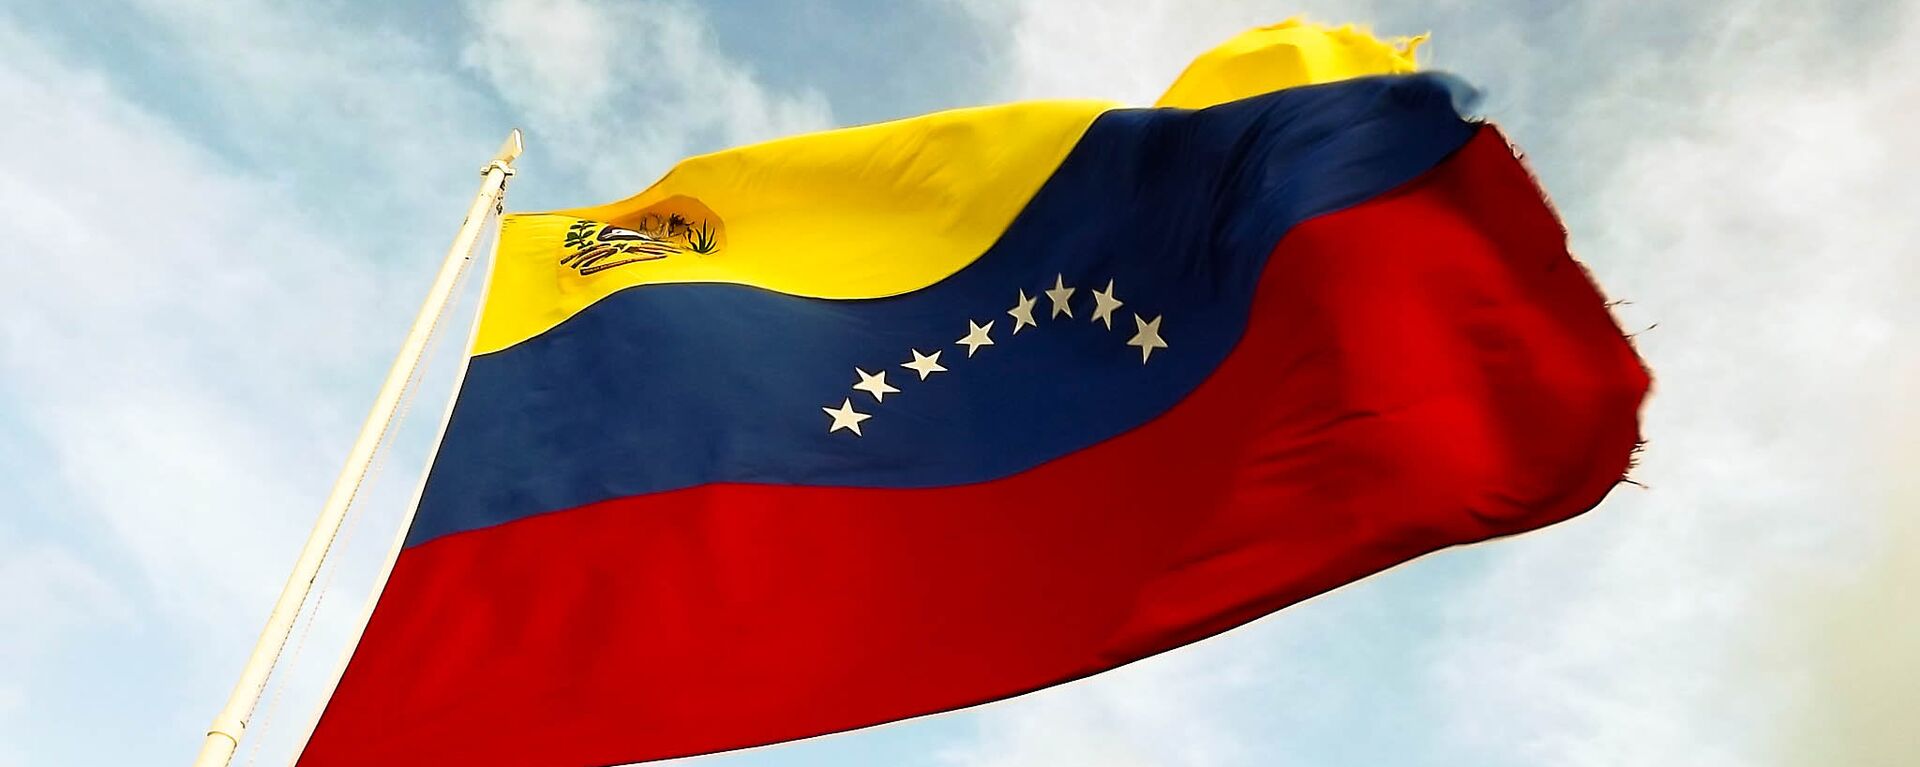 Bandera de Venezuela - Sputnik Mundo, 1920, 11.02.2021